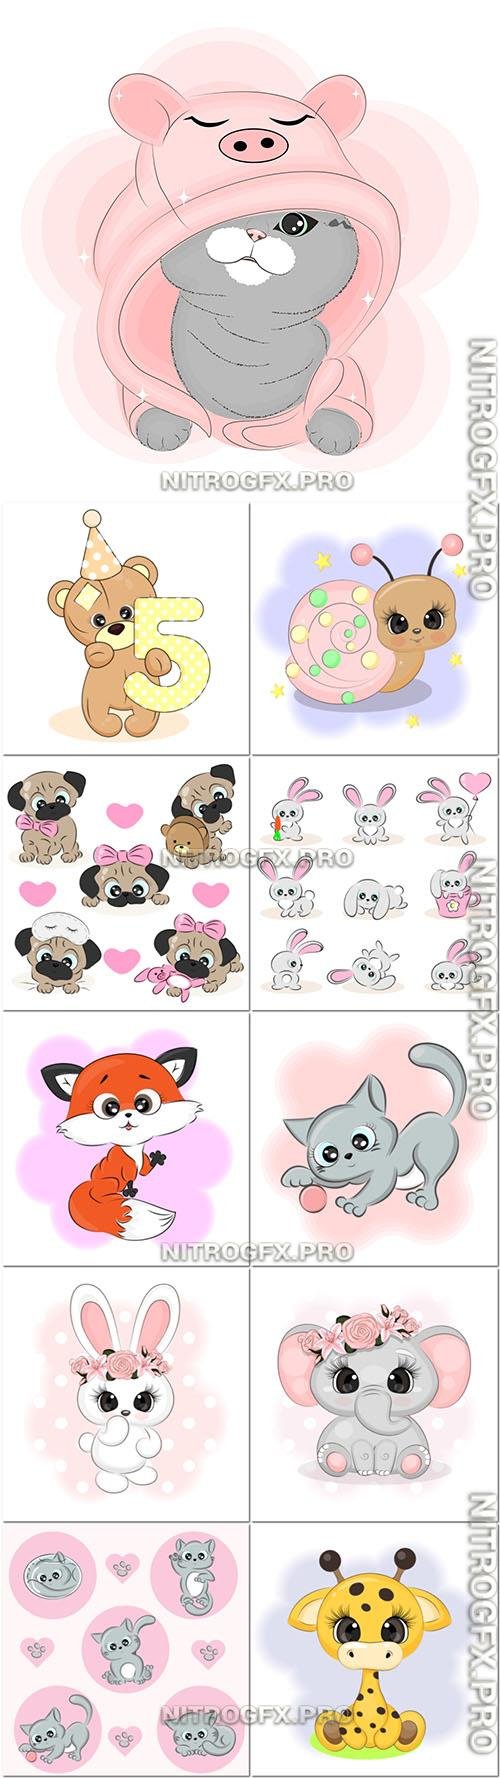 Cute Cartoon Animals Vector Set